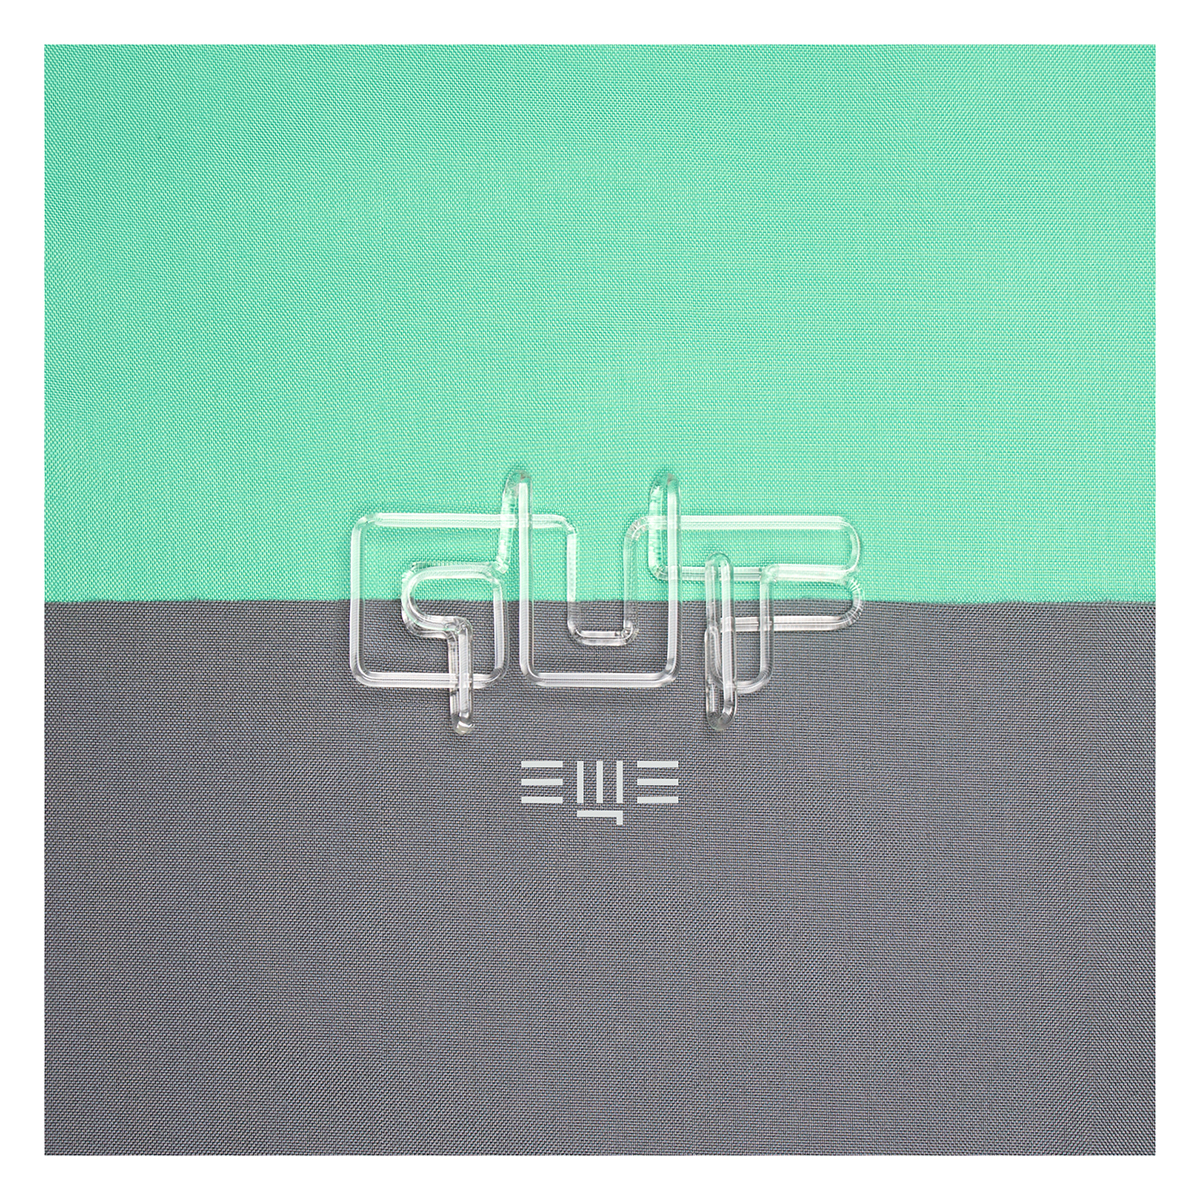 guf   ЕЩЕ CD Cover Design cover artwork